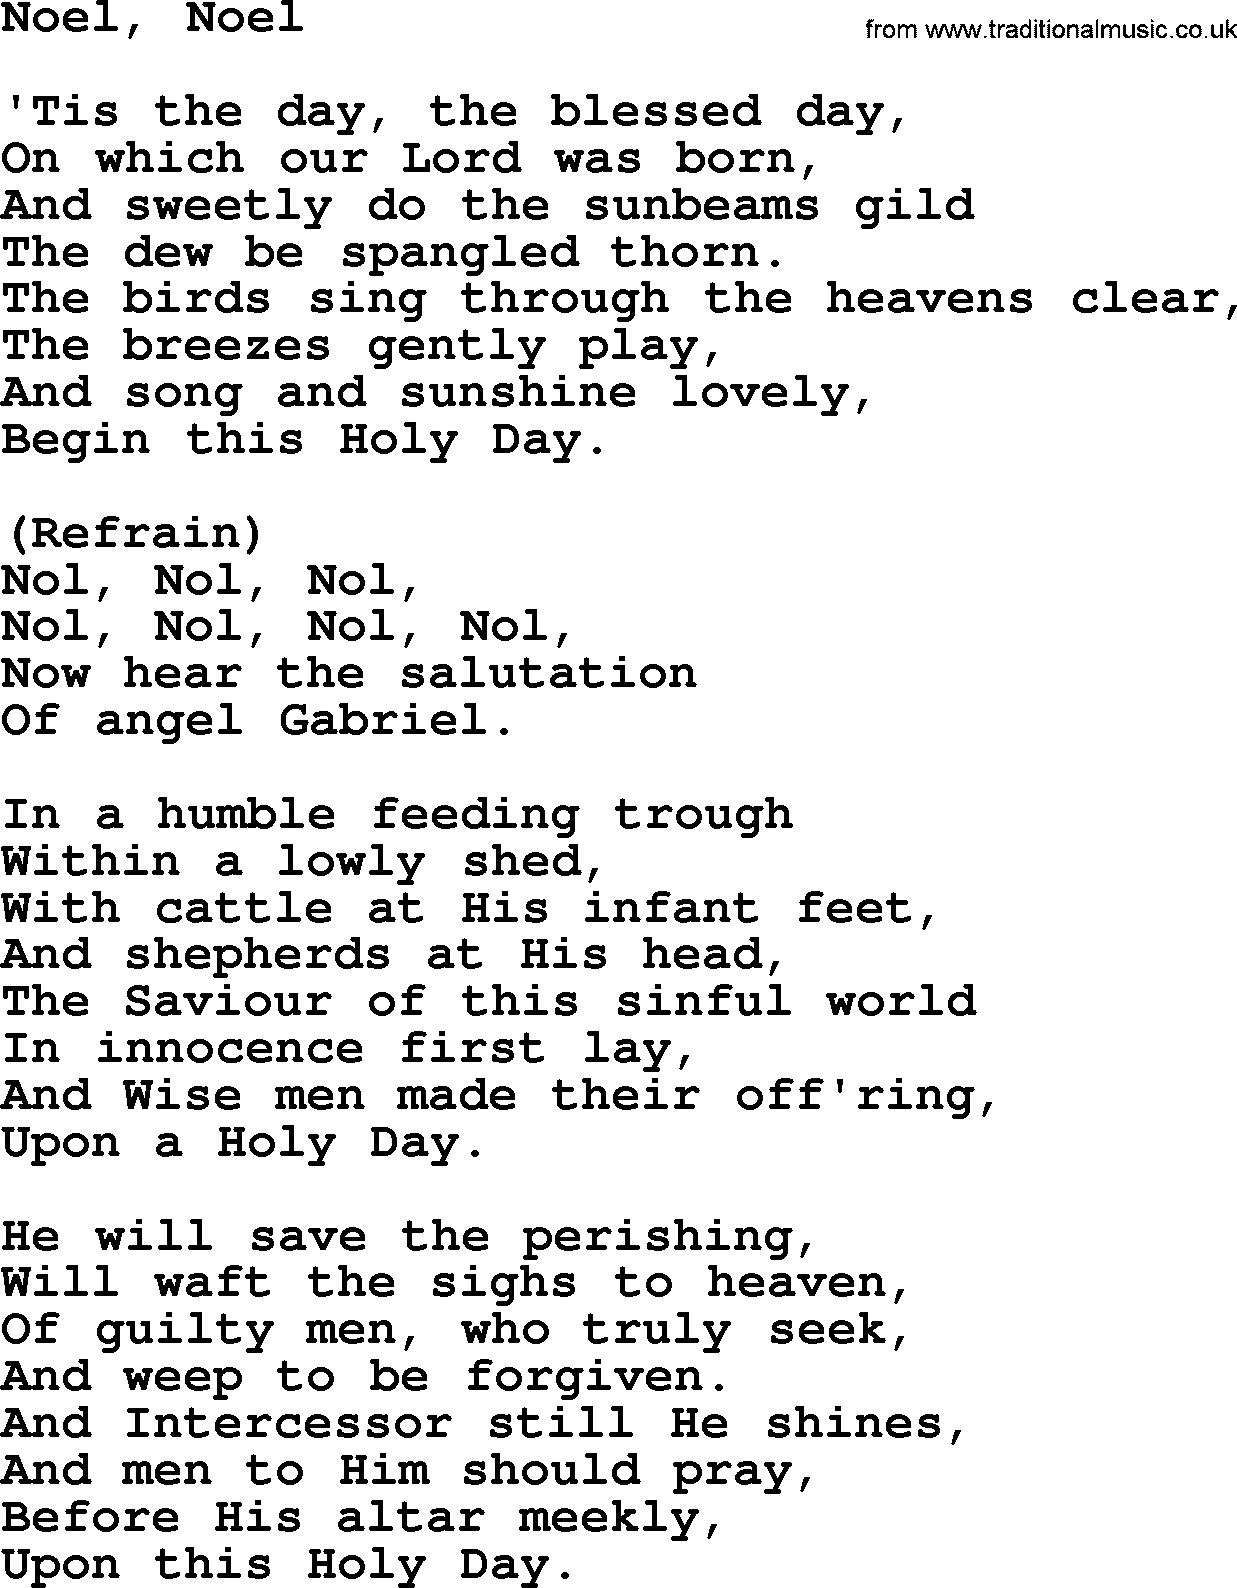 Catholic Hymn: Noel, Noel lyrics with PDF